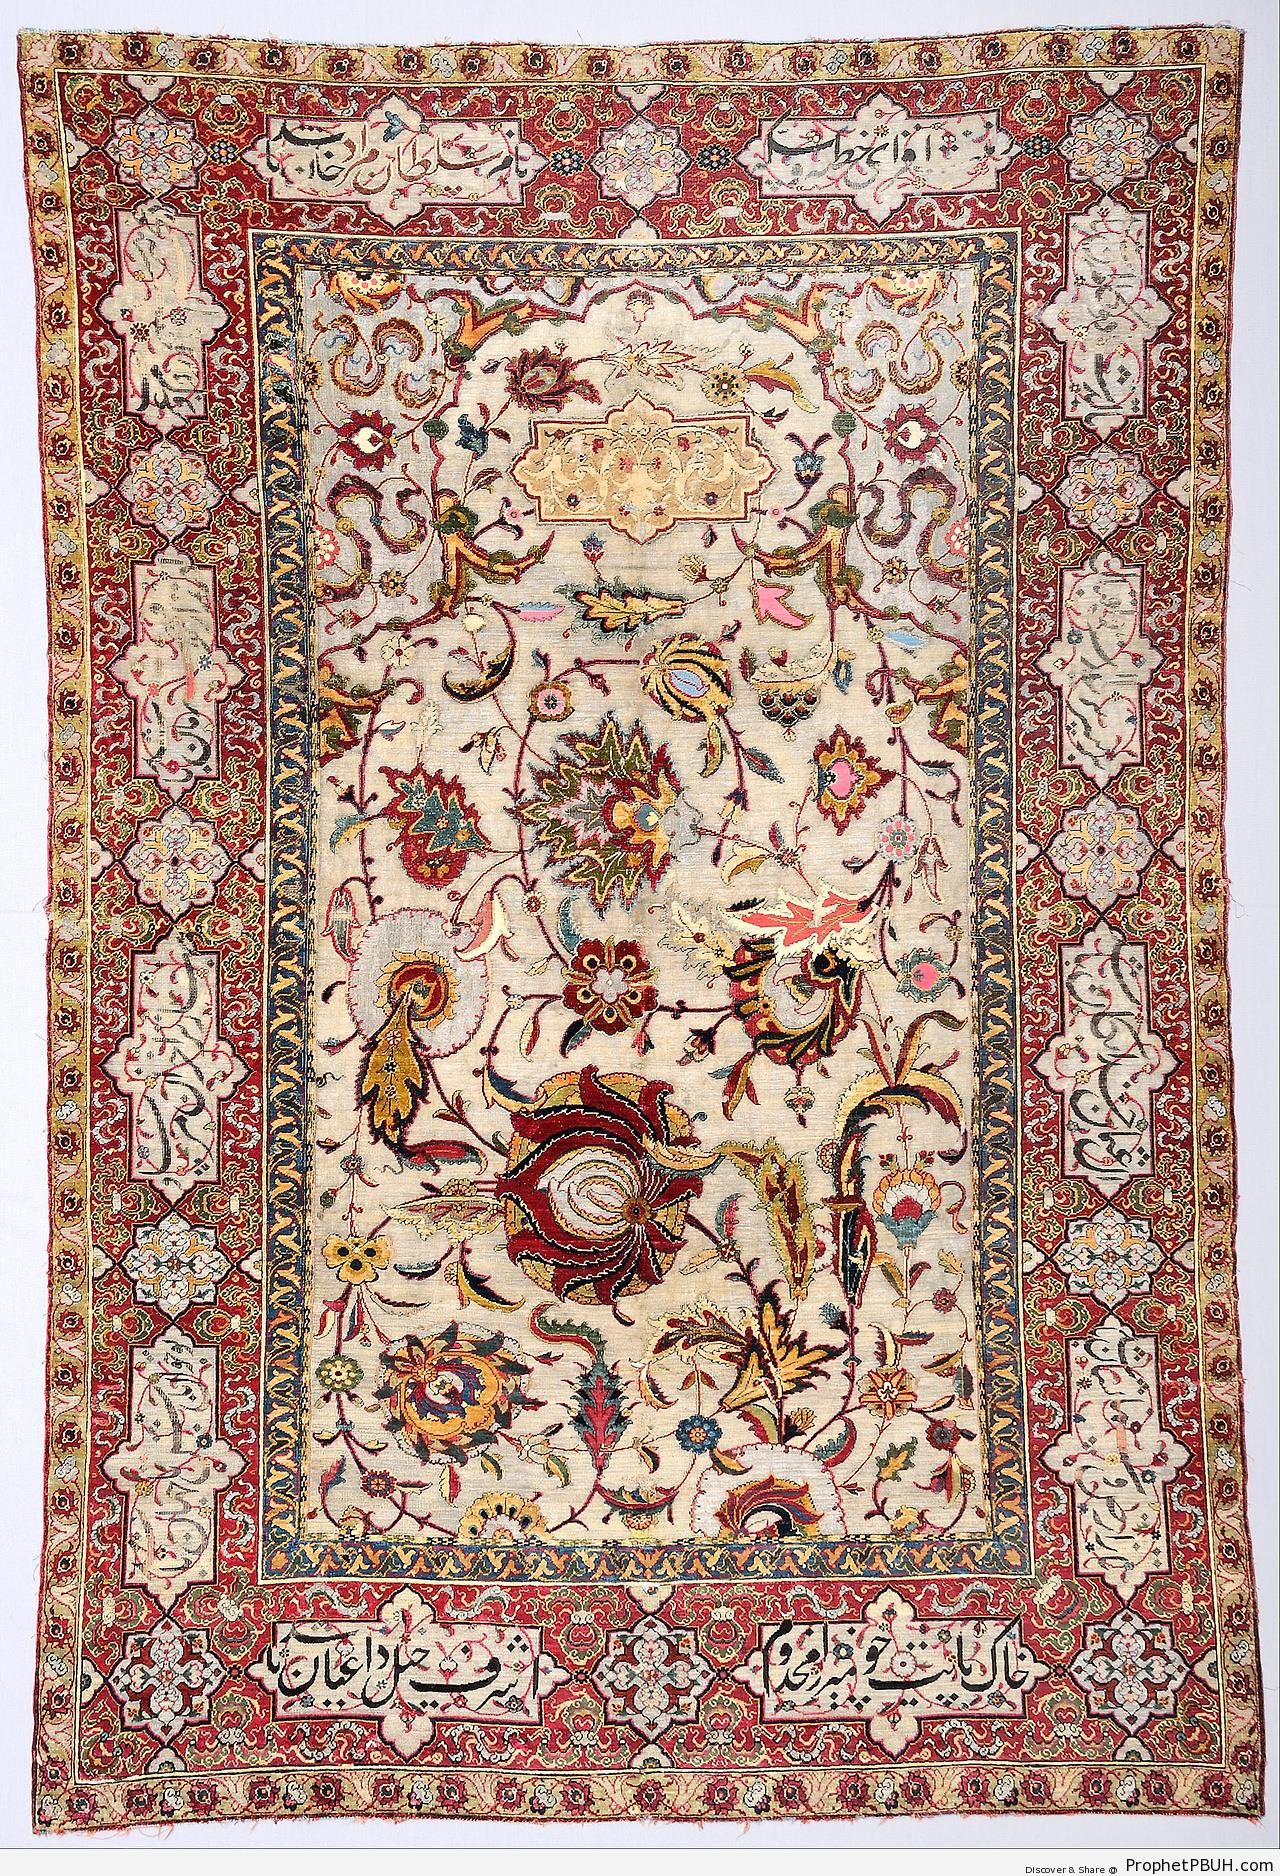 16th century silk carpet - Photos -